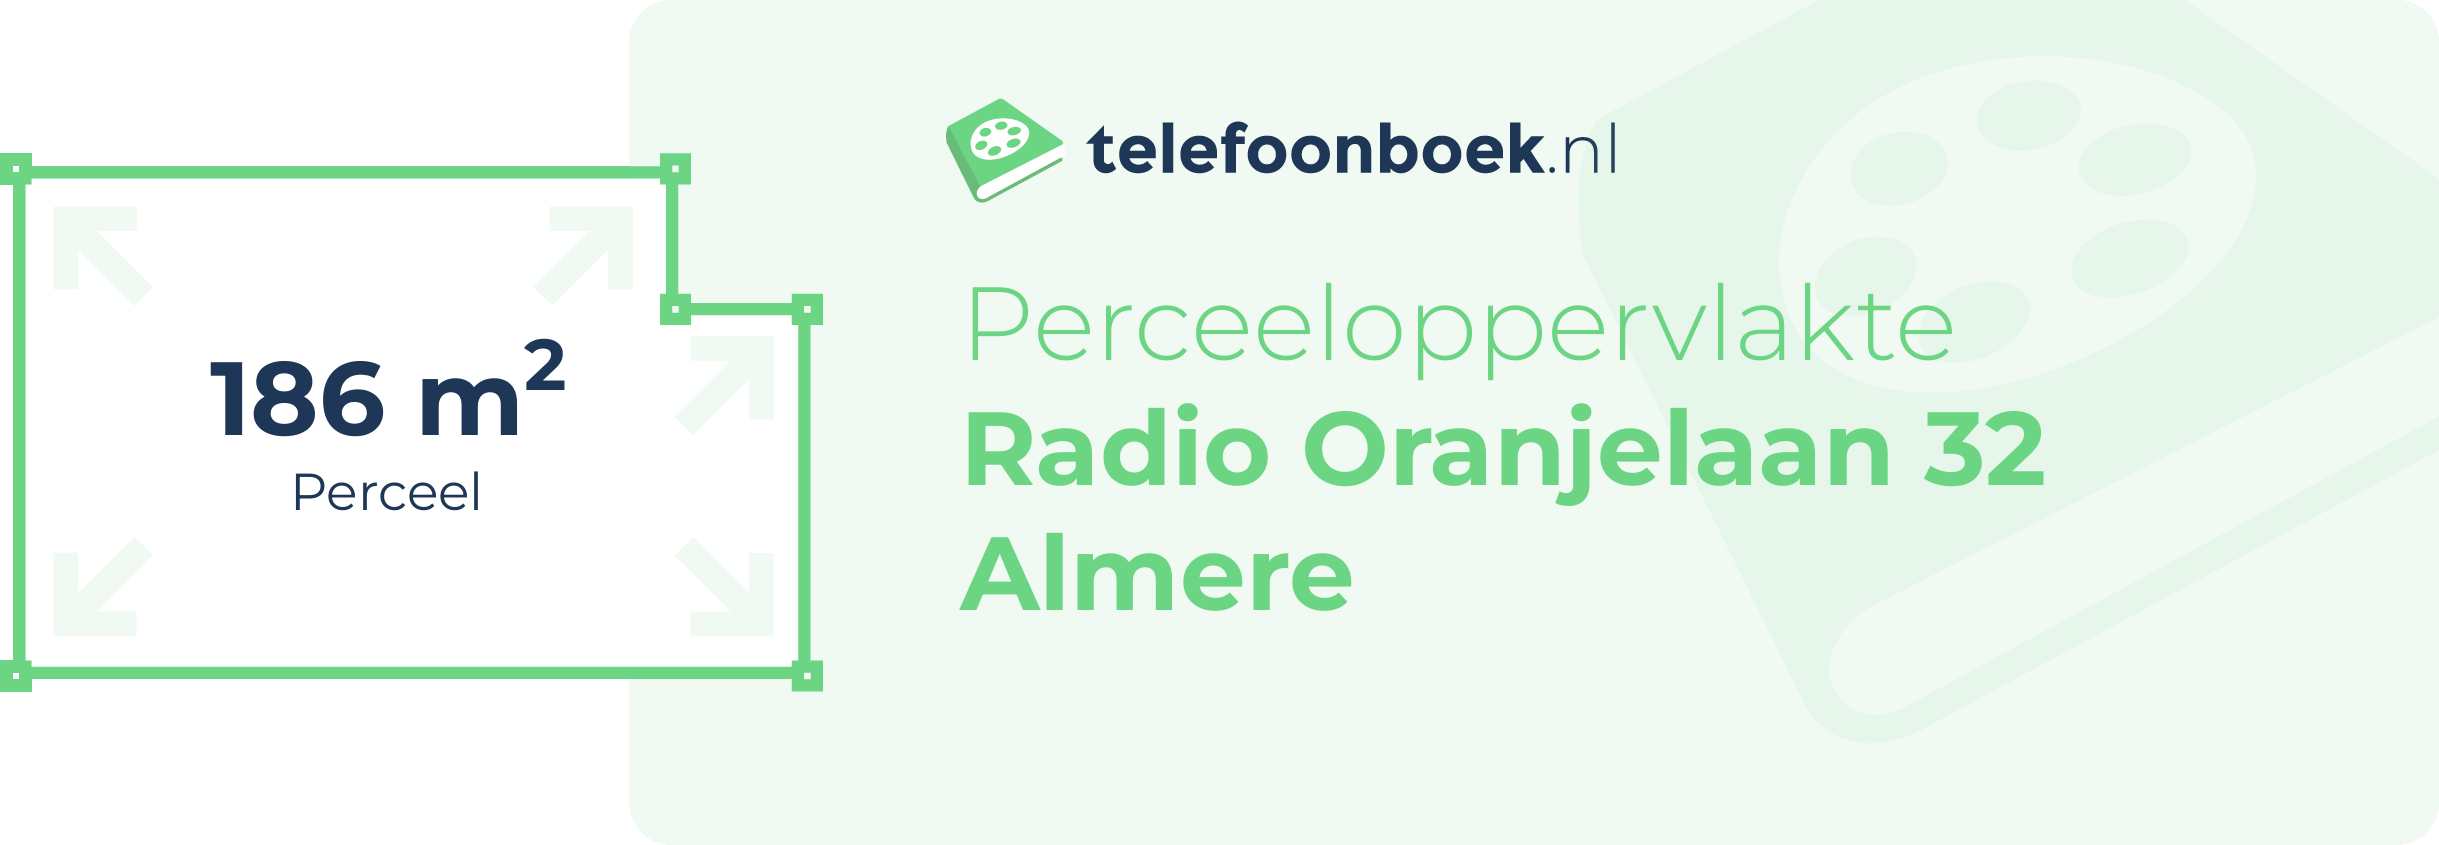 Perceeloppervlakte Radio Oranjelaan 32 Almere